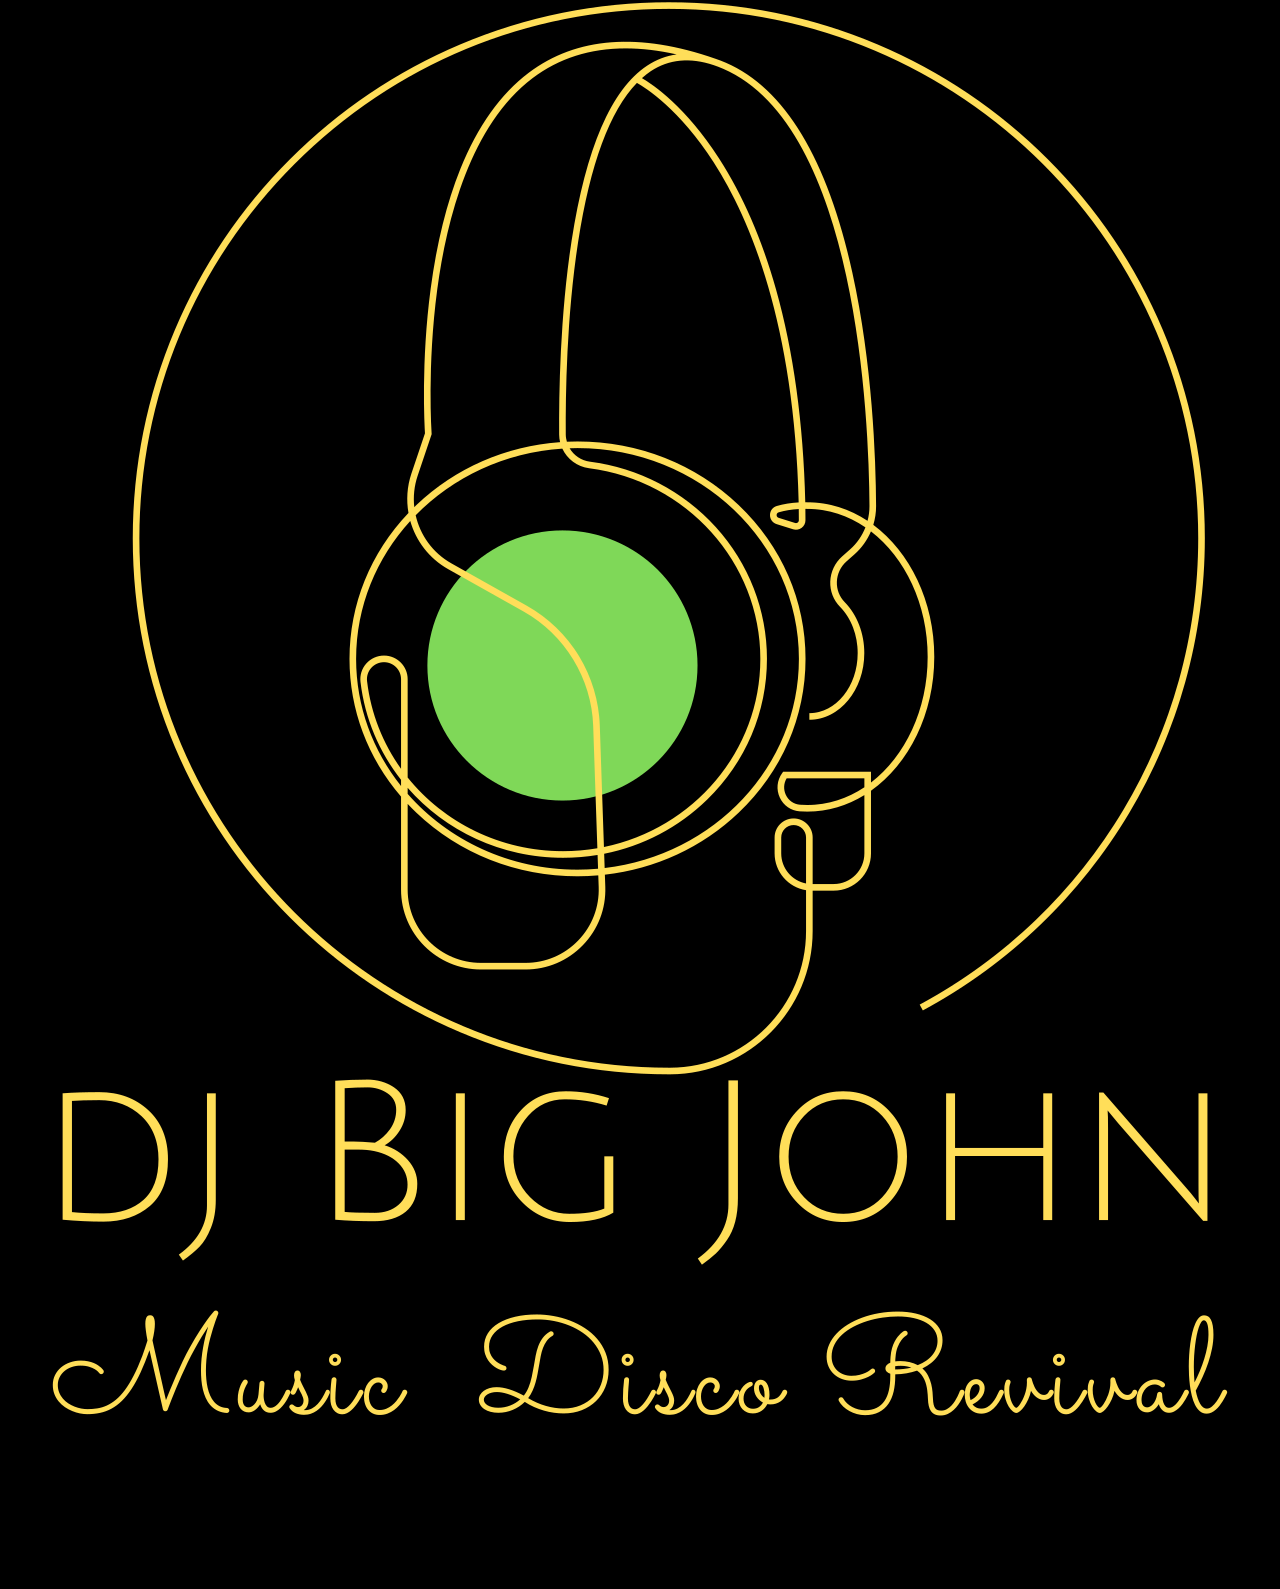 dj Big John's web page